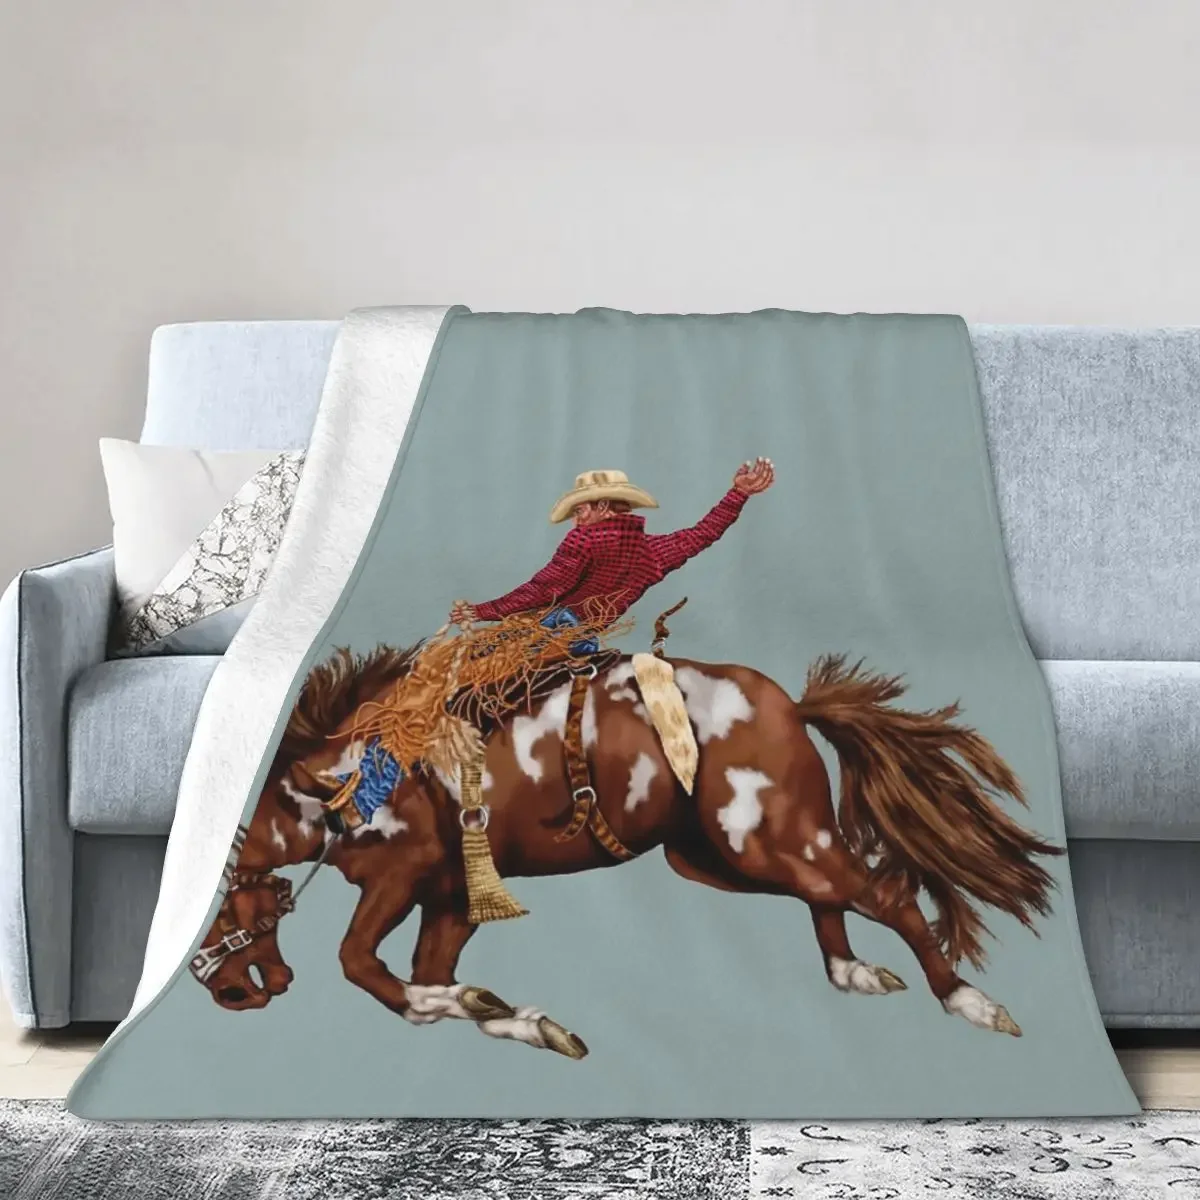 Flannel Throw Blanket Vintage Rodeo Cowboy Blankets Soft Bedspread Warm Plush Blanket for Bed Living room Picnic Travel Home